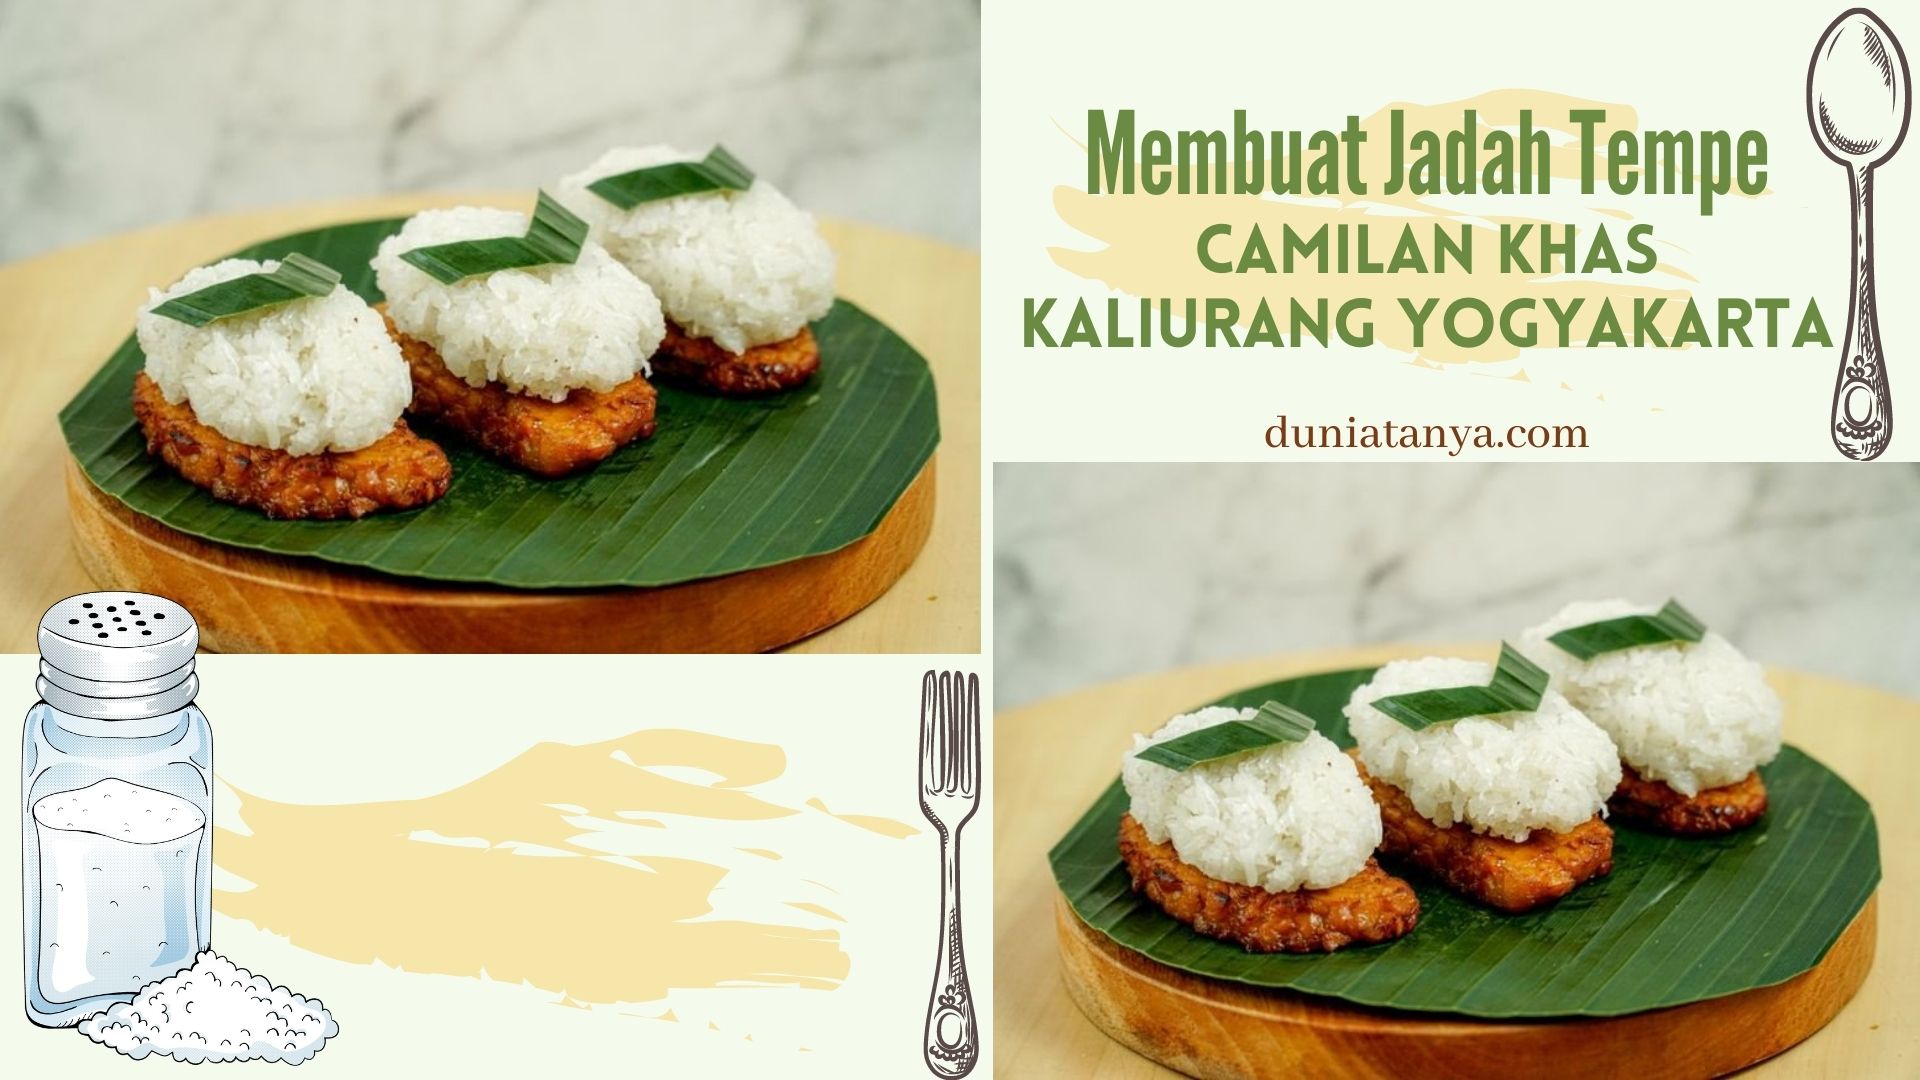 You are currently viewing Membuat Jadah Tempe,Camilan Khas Kaliurang Yogyakarta